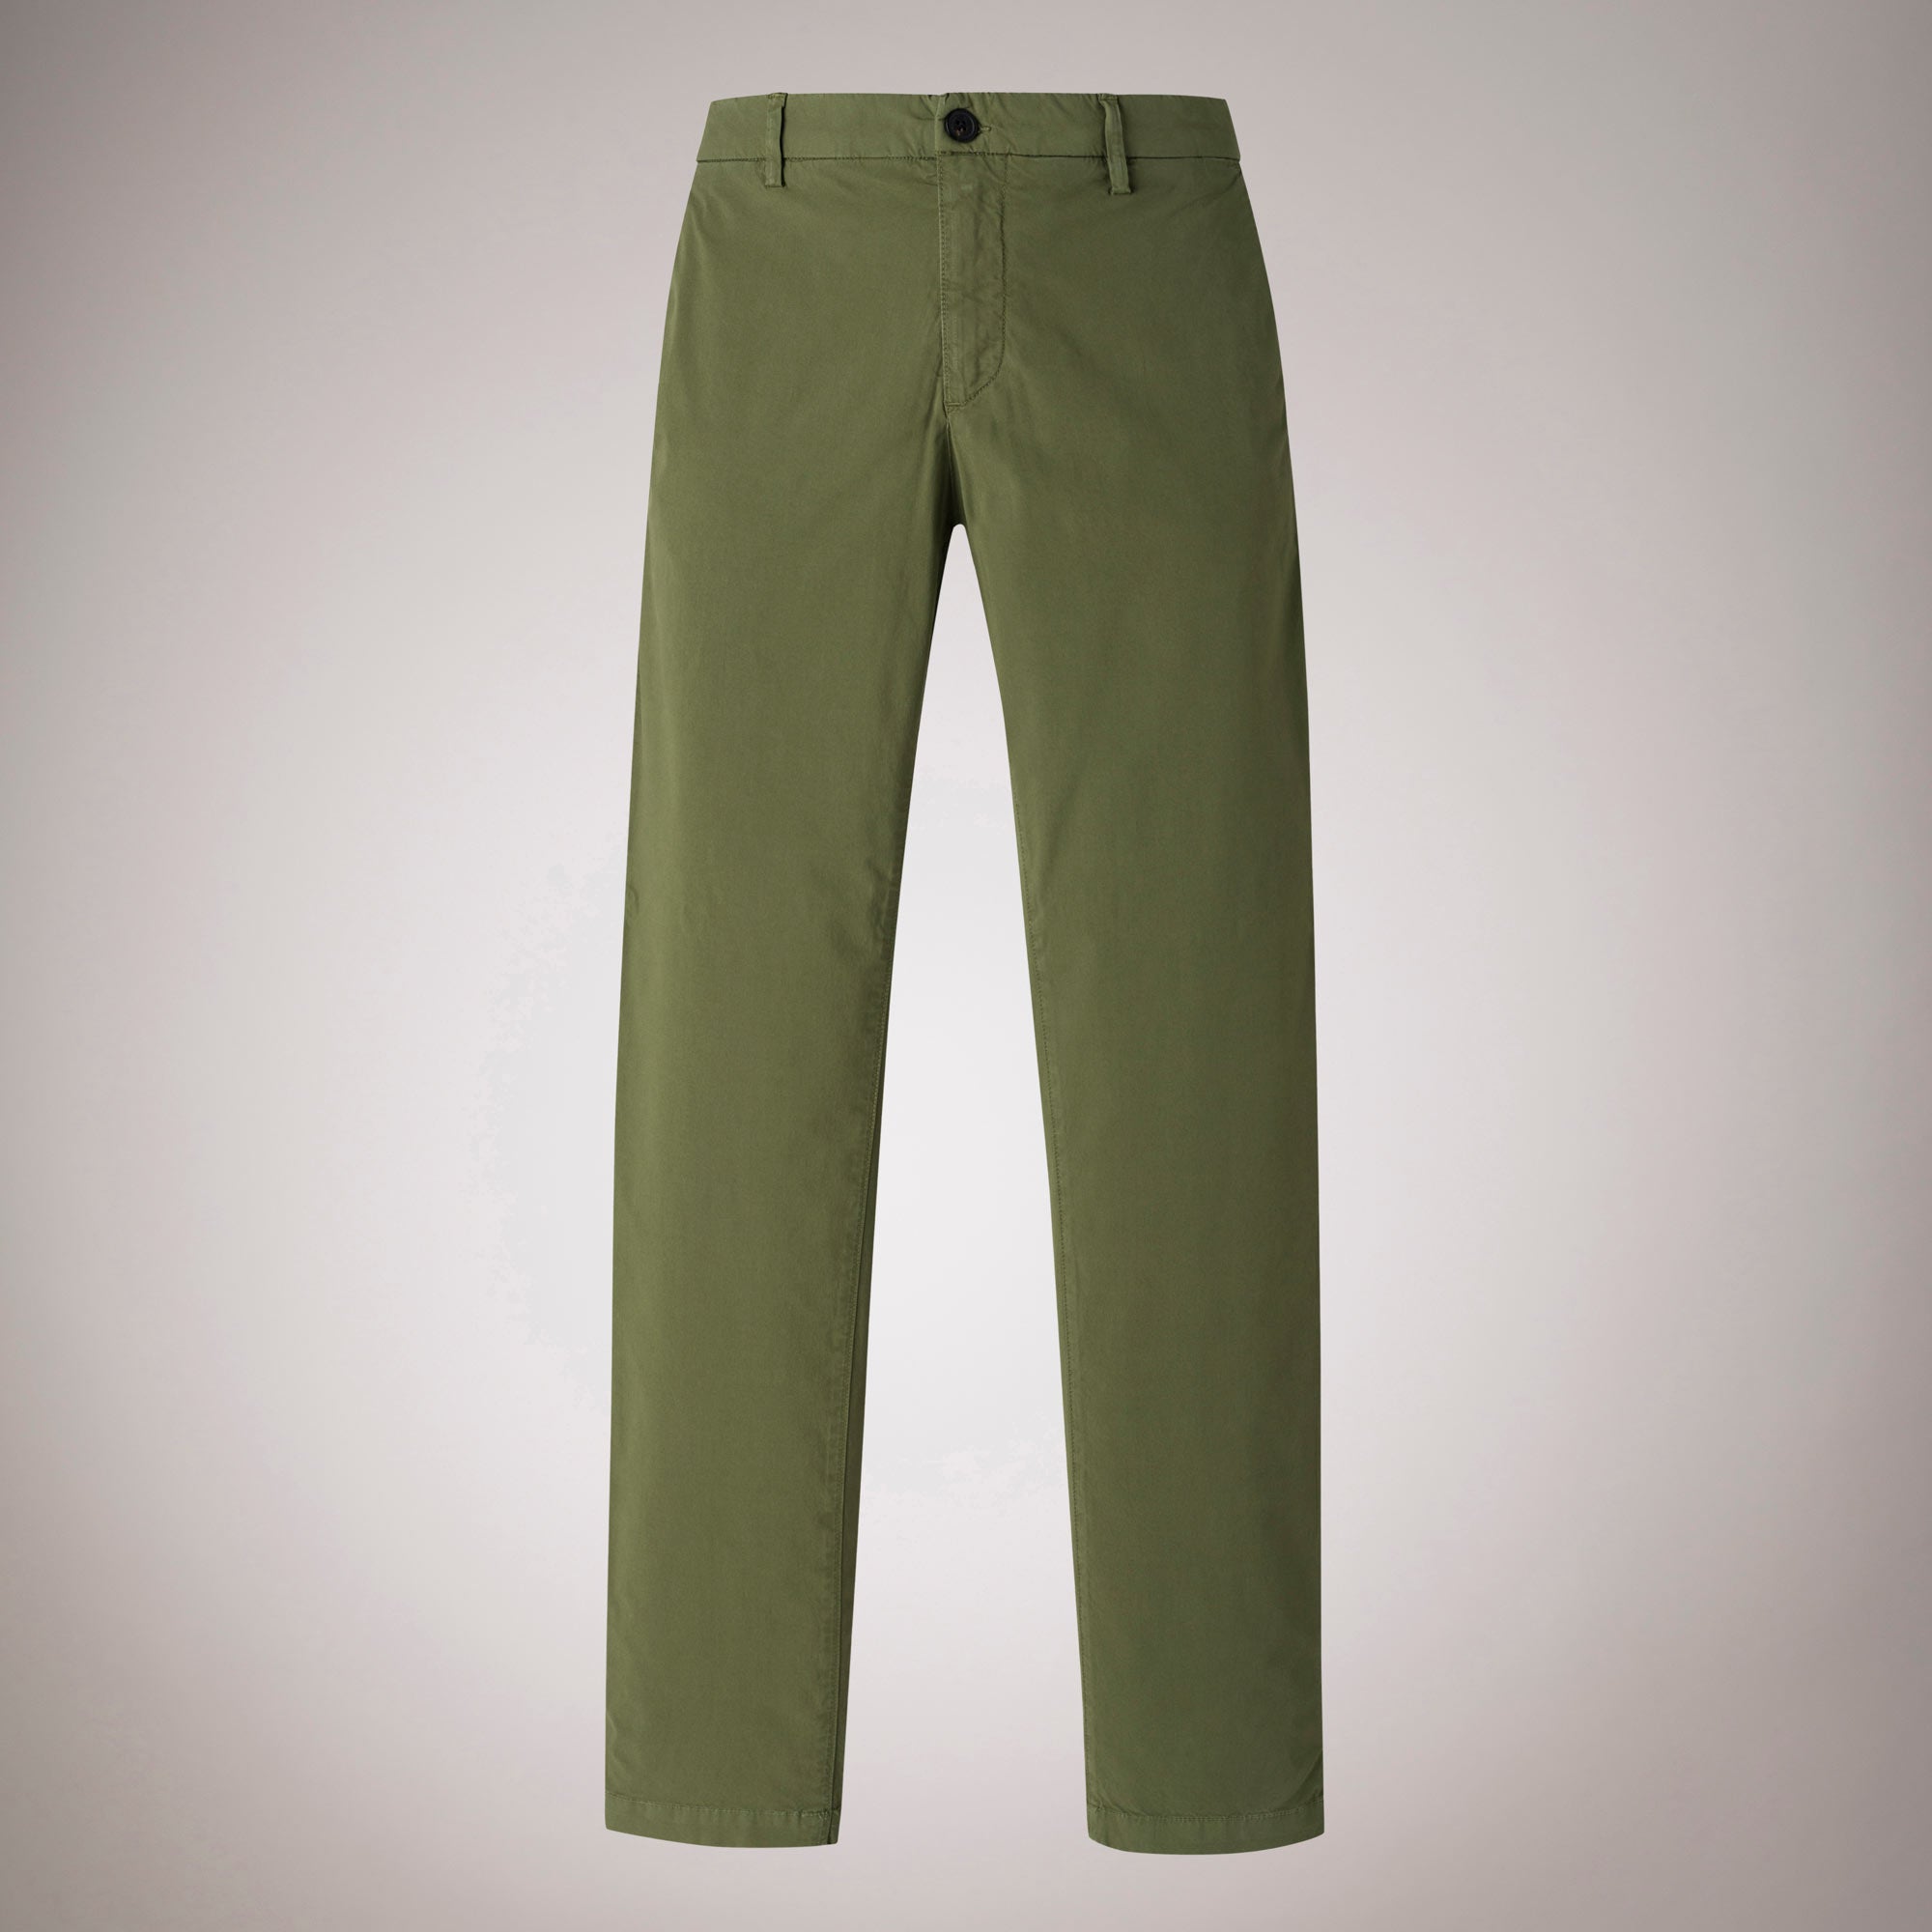 Chino trousers in stretch cotton poplin